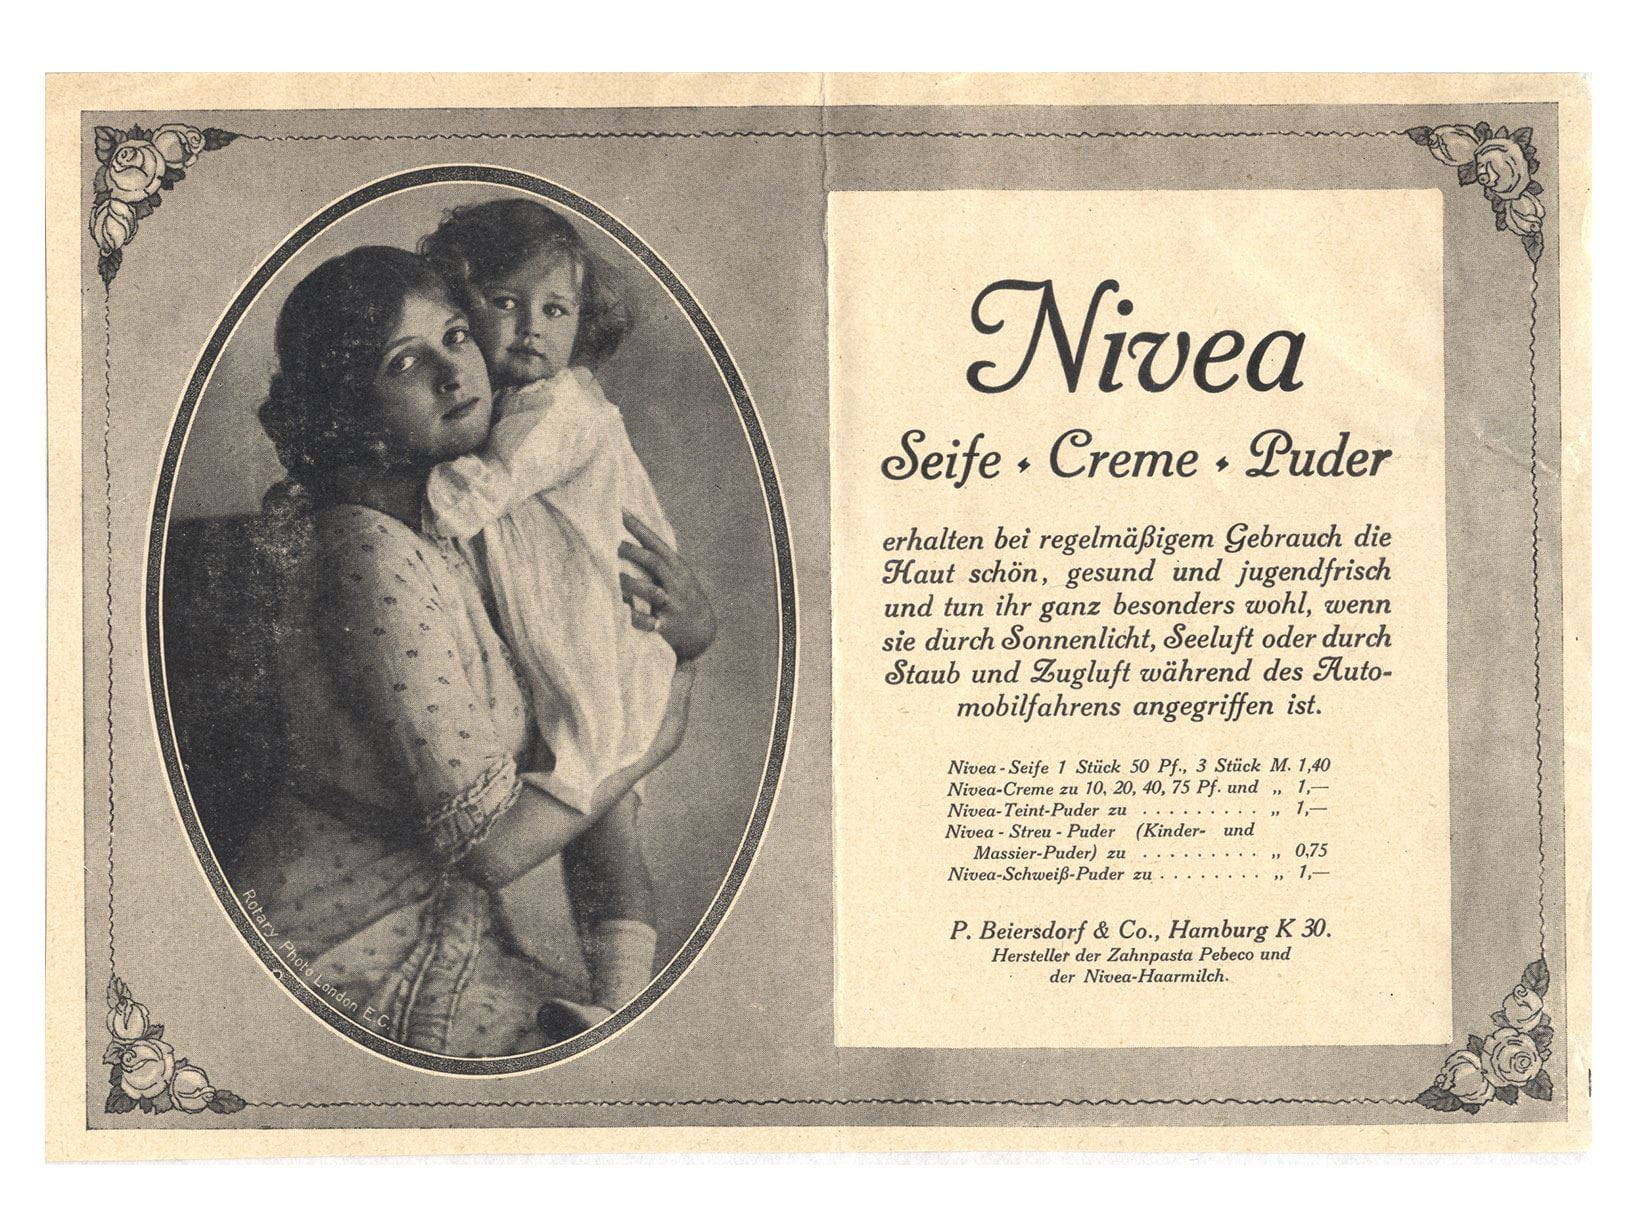 NIVEA Creme, Powder, and Soap 1913